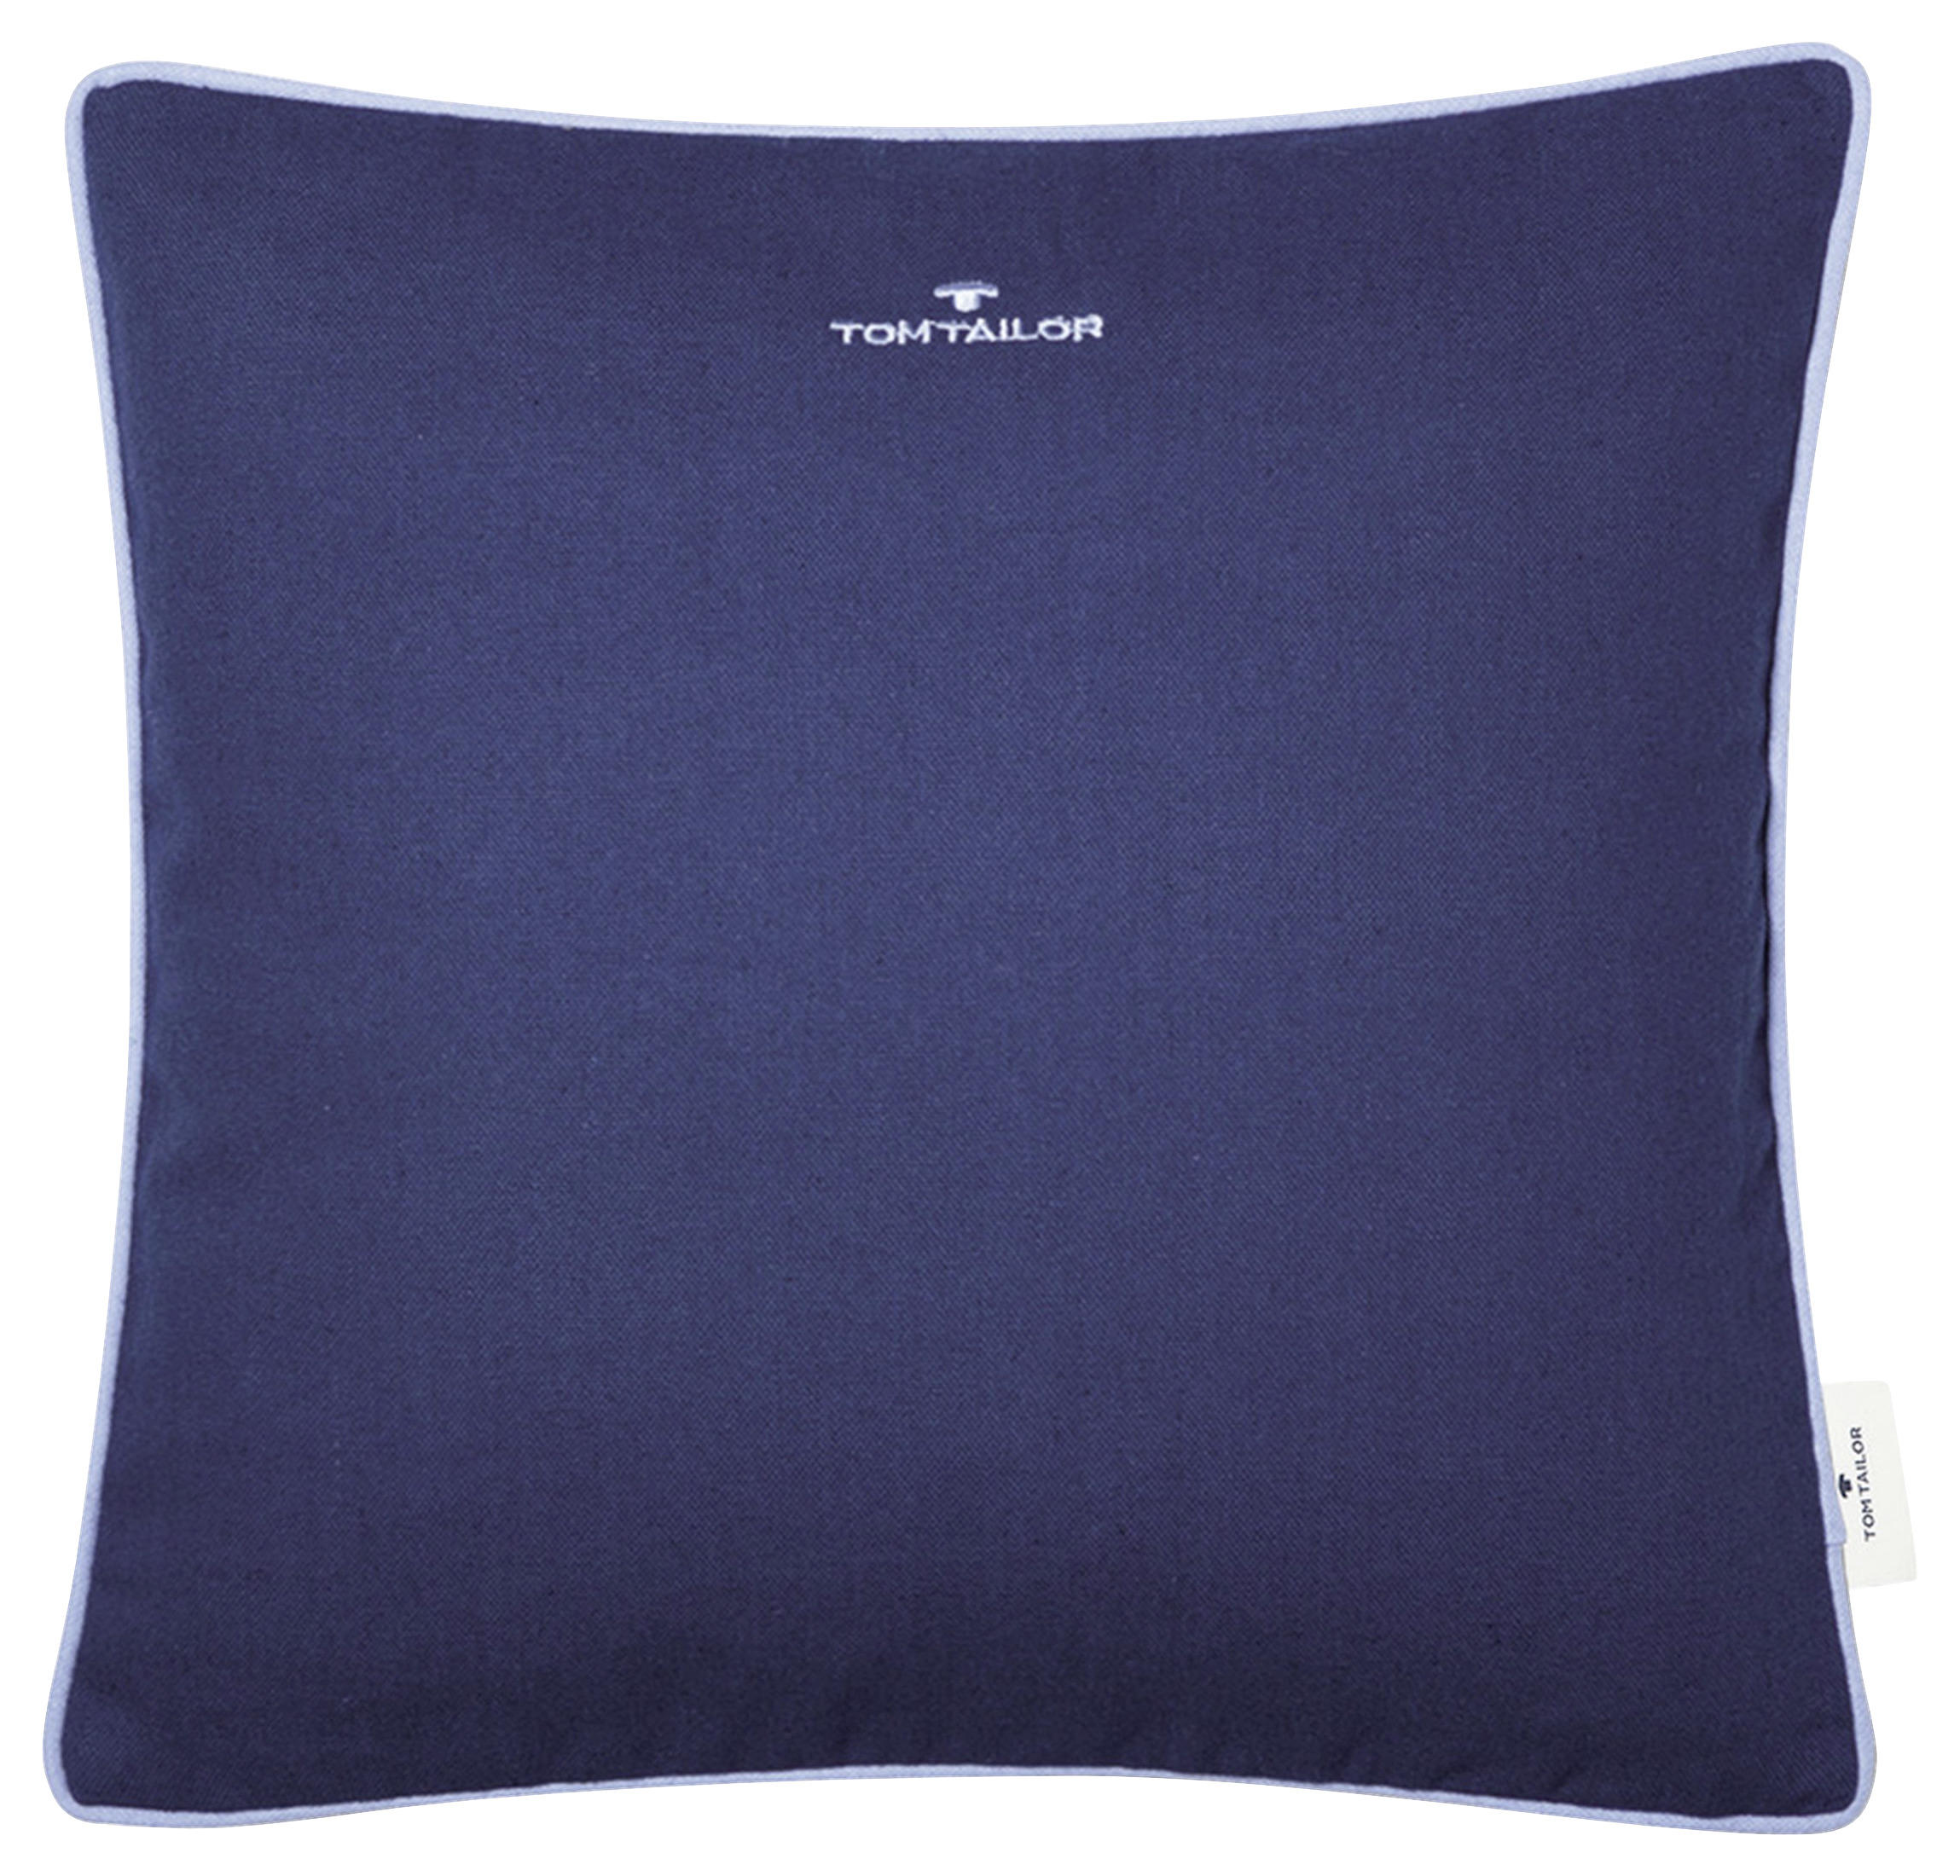 KISSENHÜLLE Dove Signature 40/40 cm  - Blau/Dunkelblau, KONVENTIONELL, Textil (40/40cm) - Tom Tailor